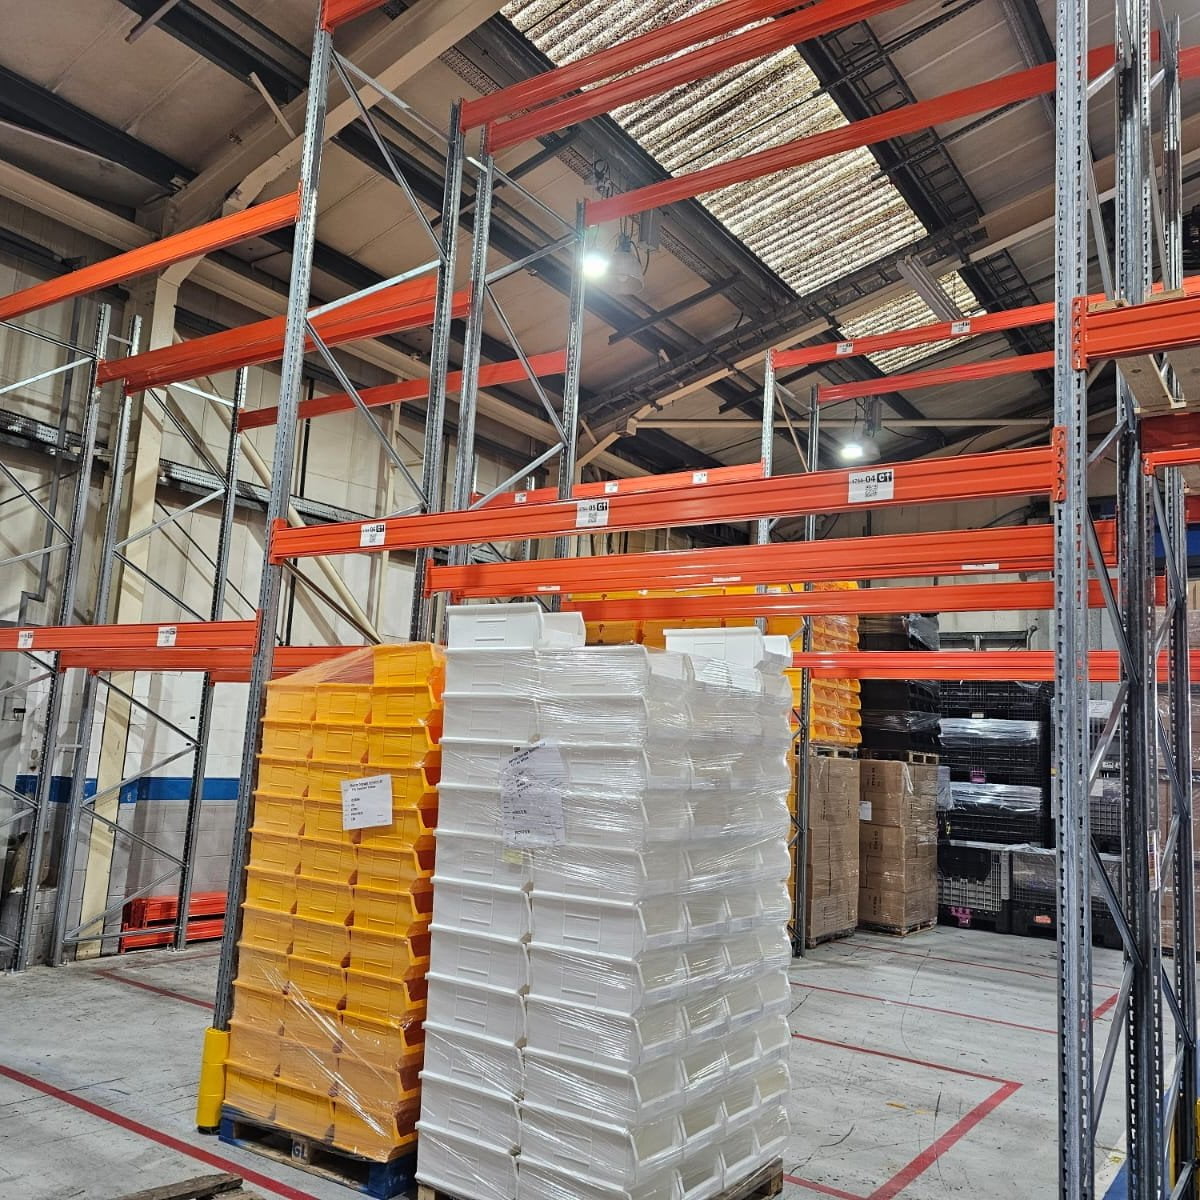 Pallet racking erected in warehouse